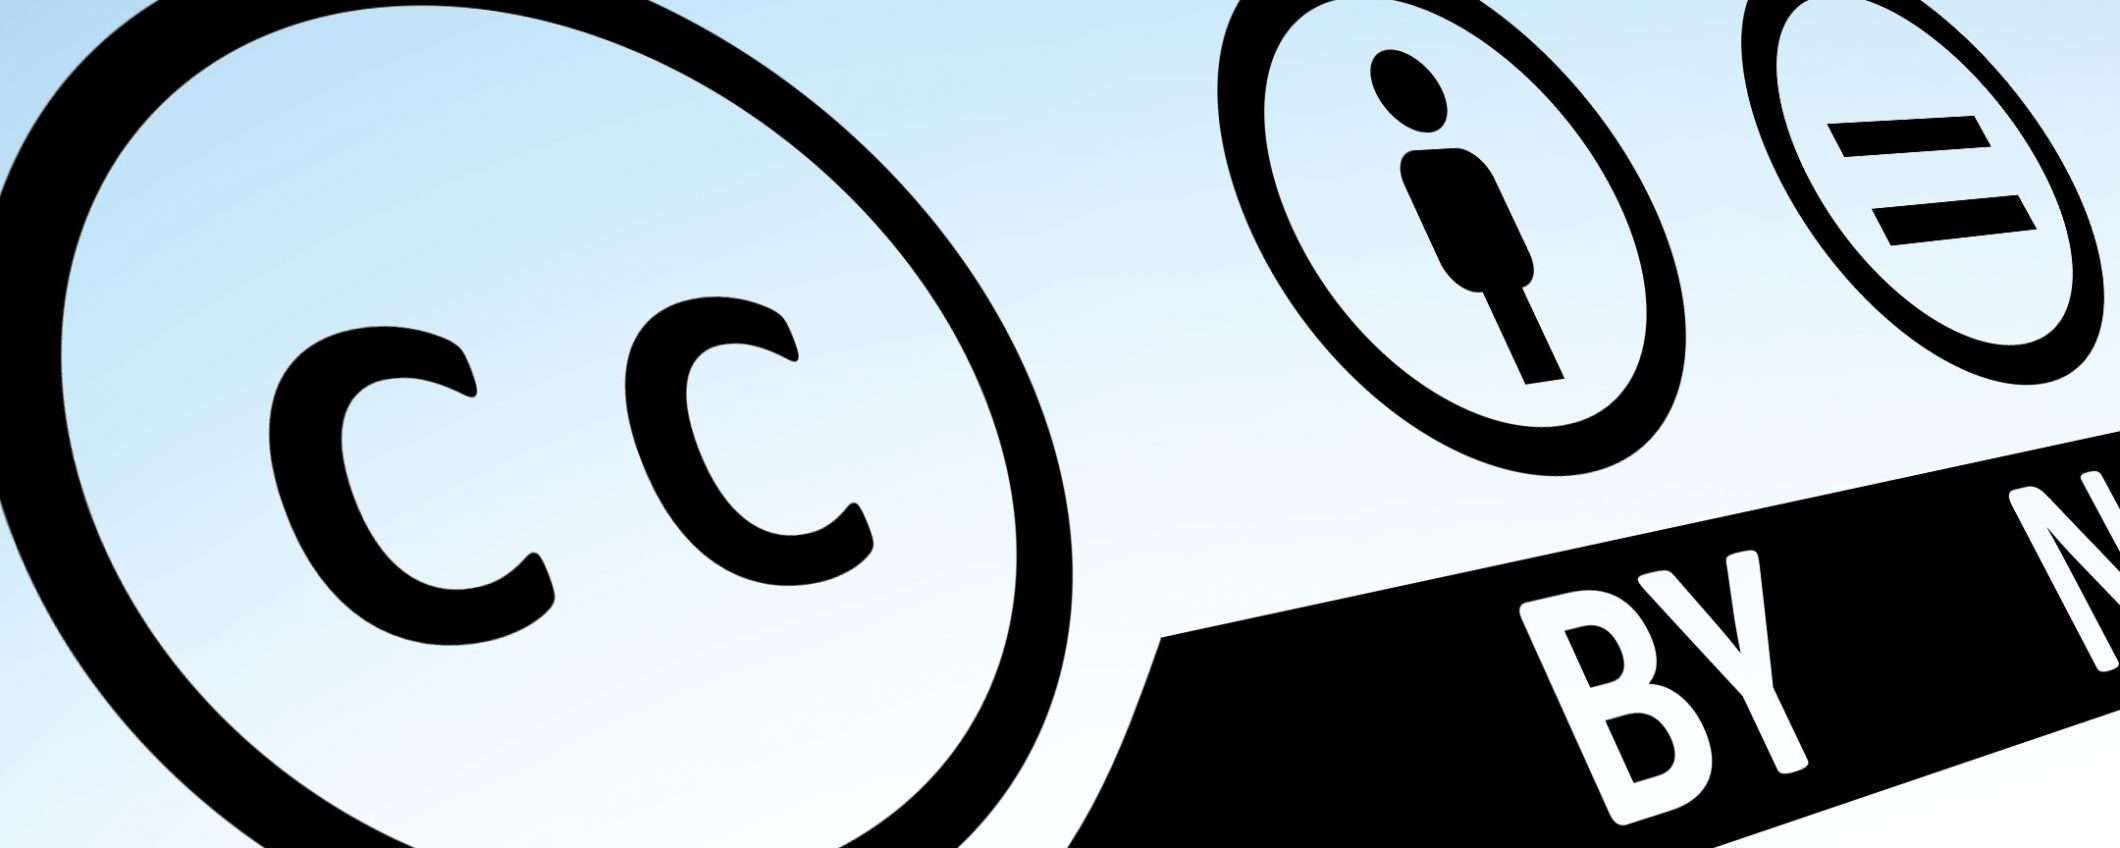 Creative Commons, panacea per le informative privacy?